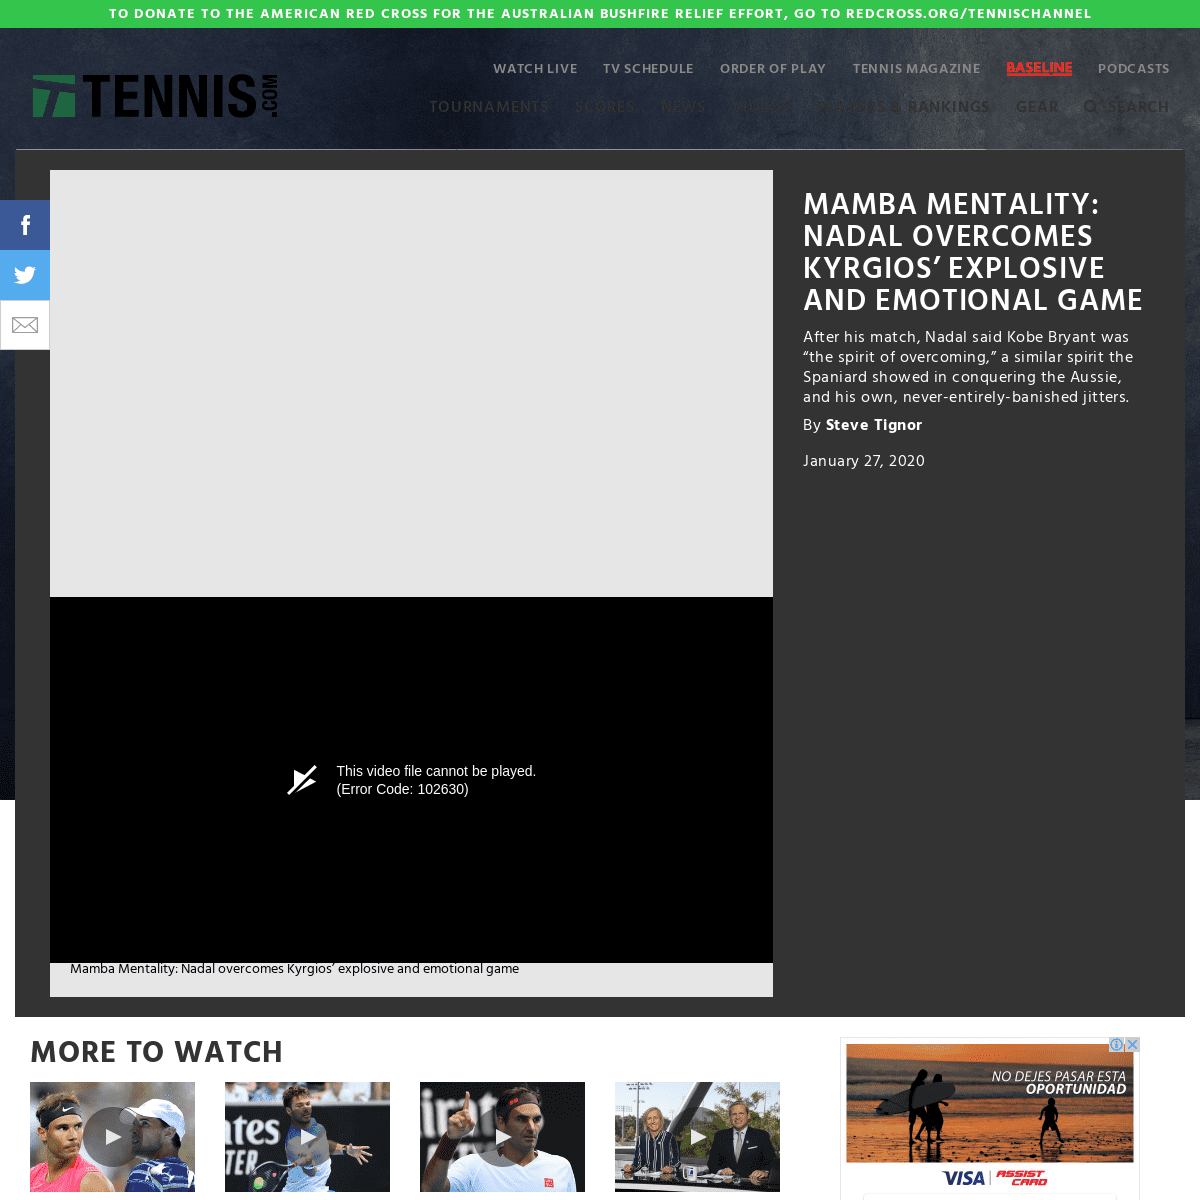 A complete backup of www.tennis.com/pro-game/2020/01/rafael-nadal-nick-kyrgios-kobe-bryant-australian-open-la-lakers-melbourne-2